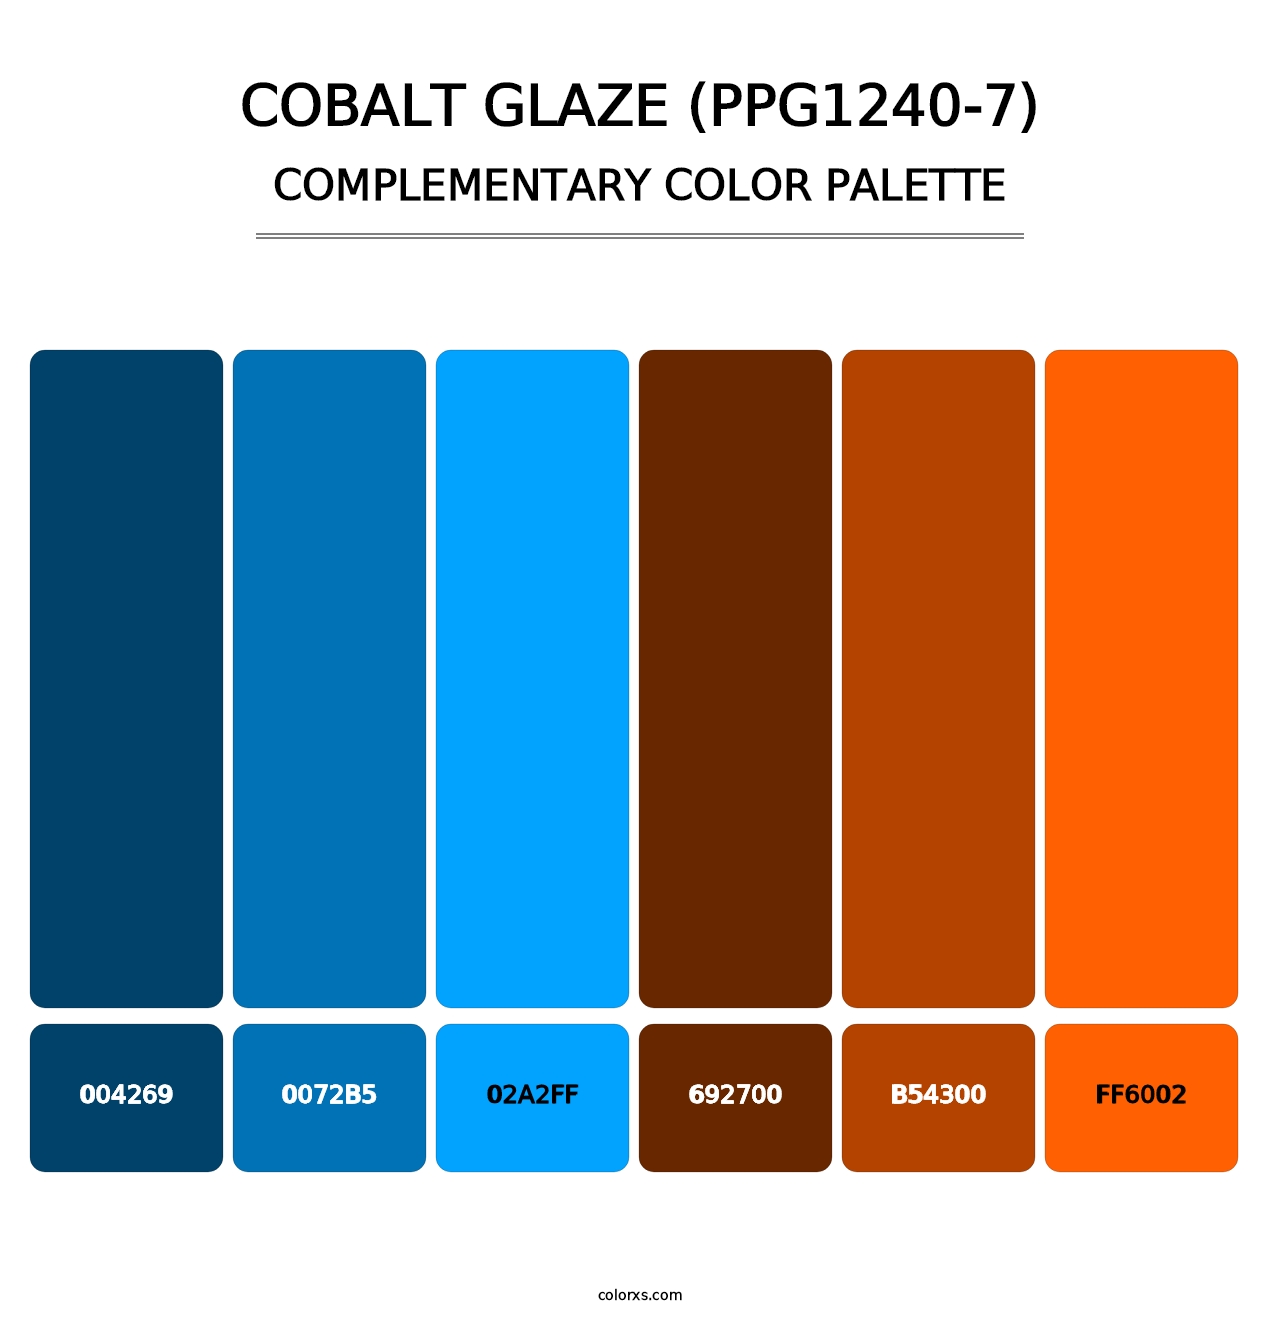 Cobalt Glaze (PPG1240-7) - Complementary Color Palette